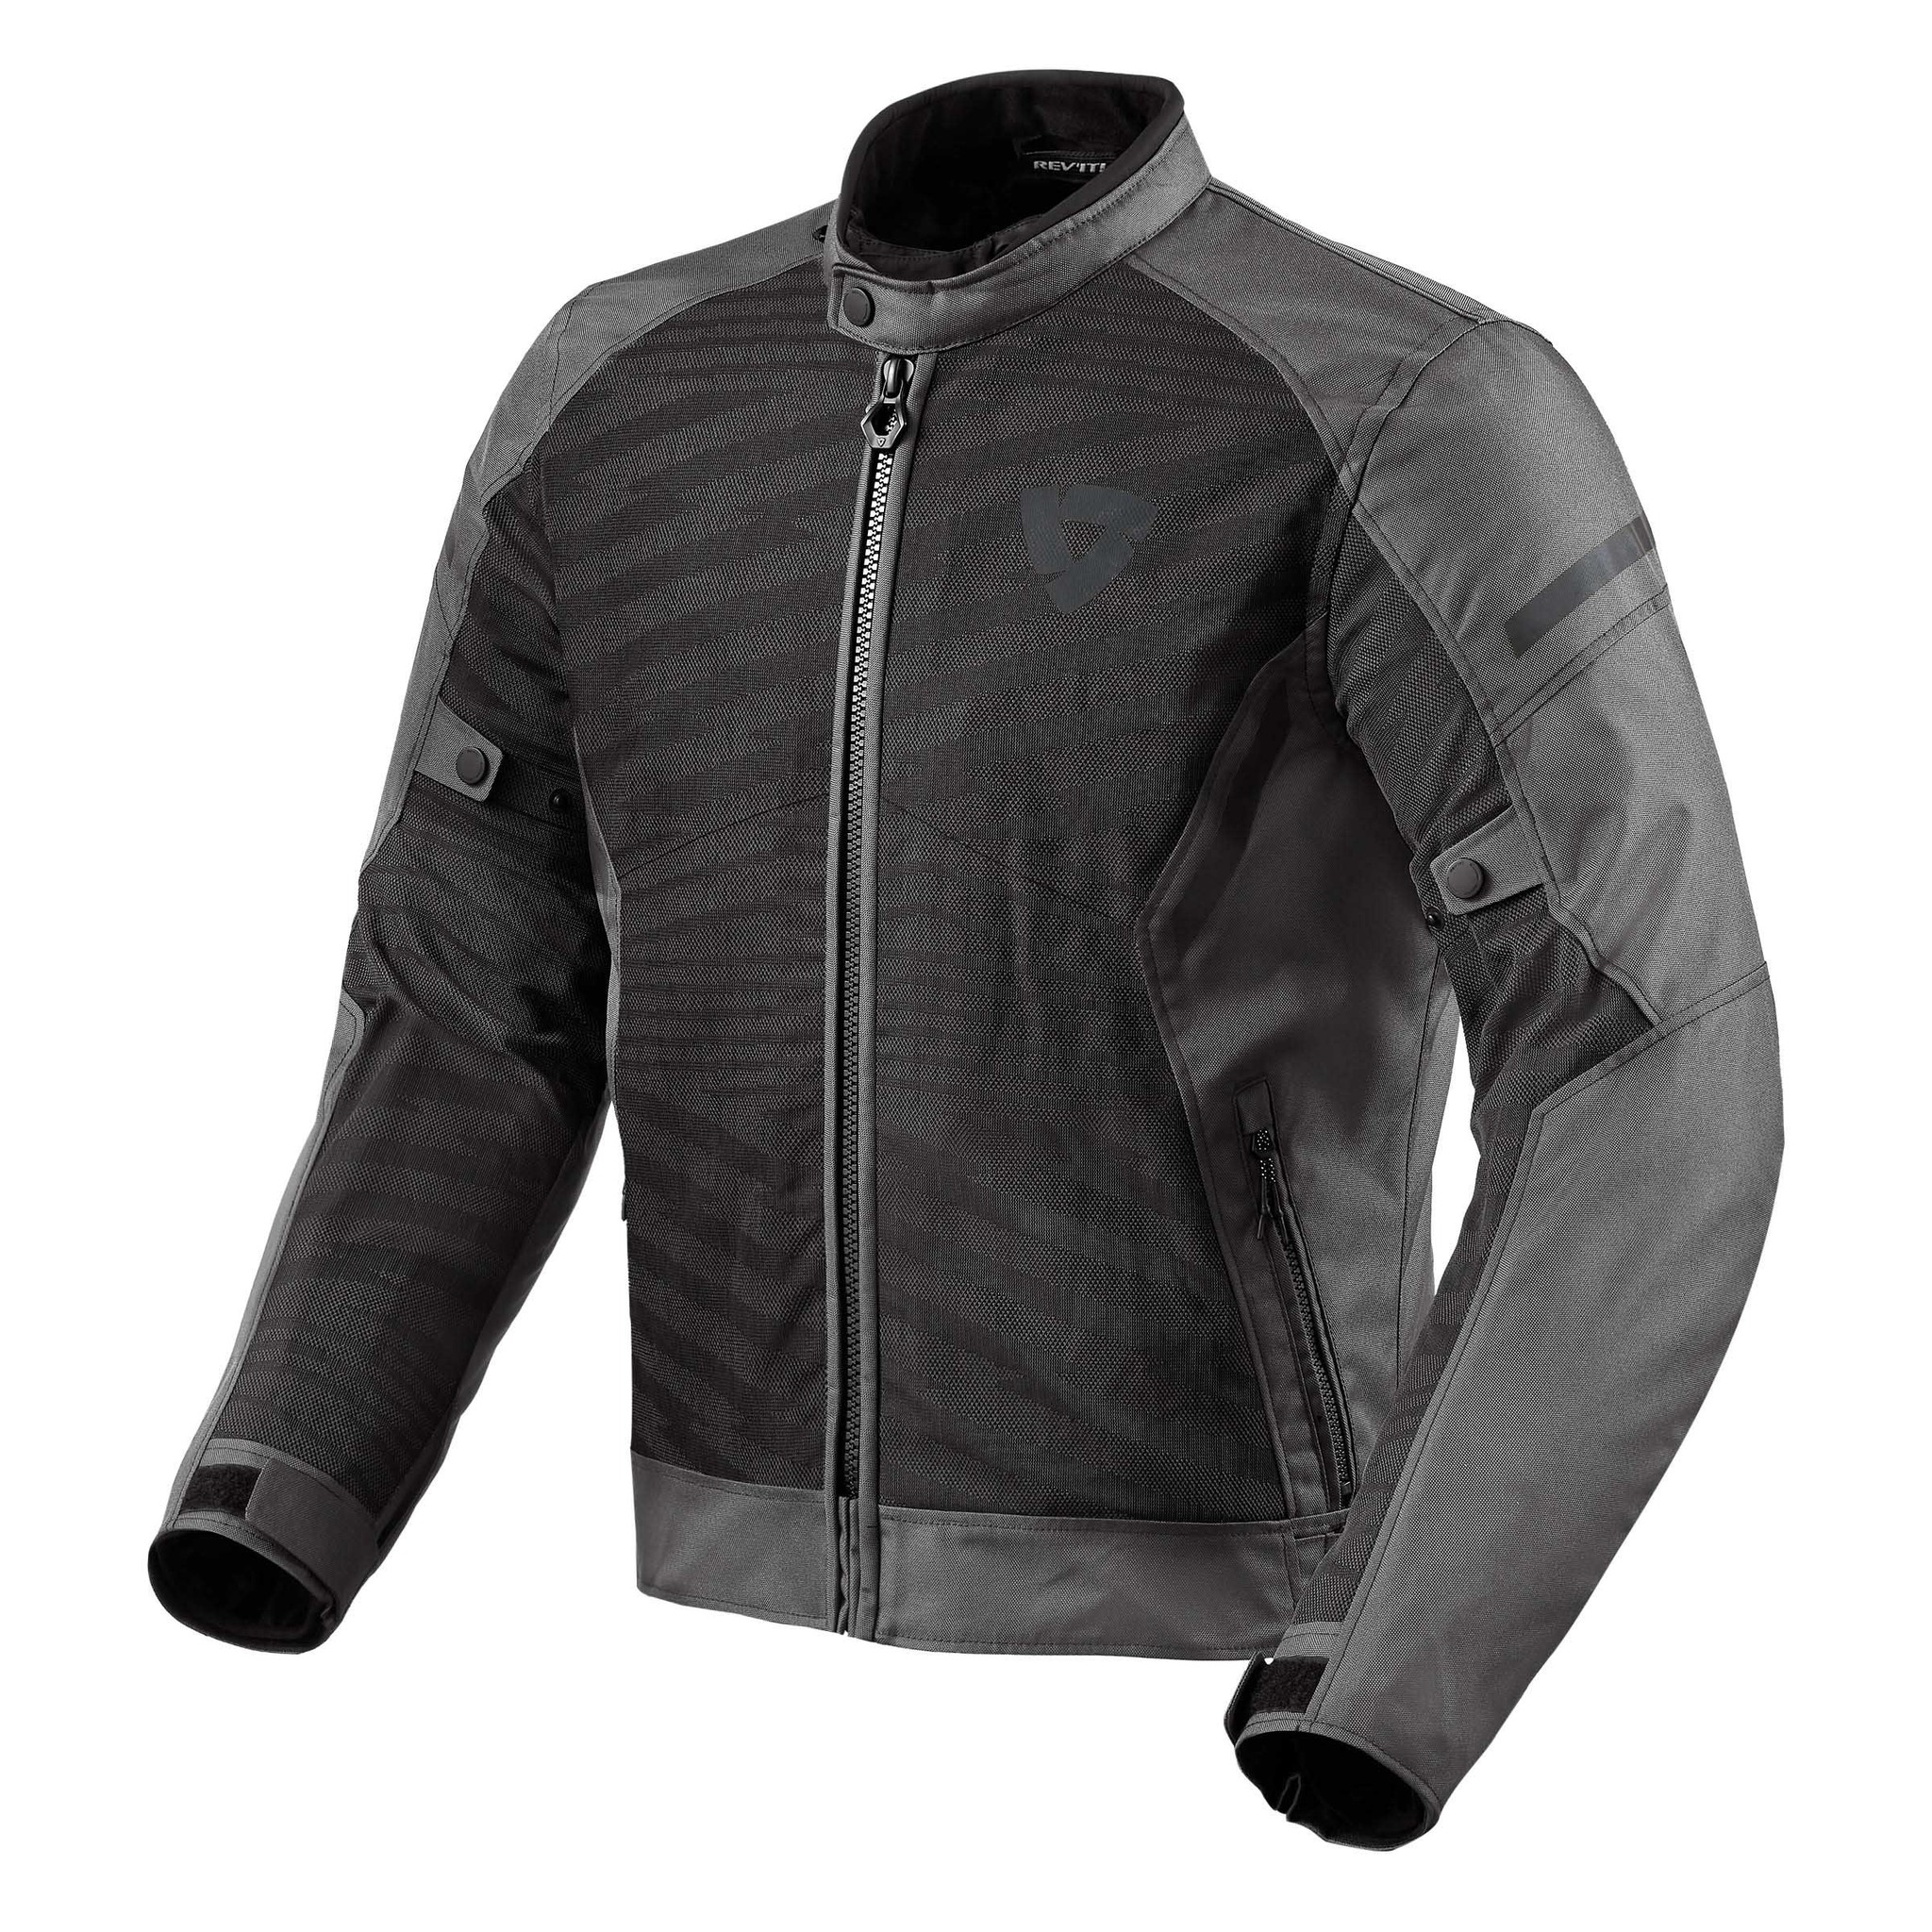 Rev'it Torque 2 H2O motorcycle jacket Black Anthracite